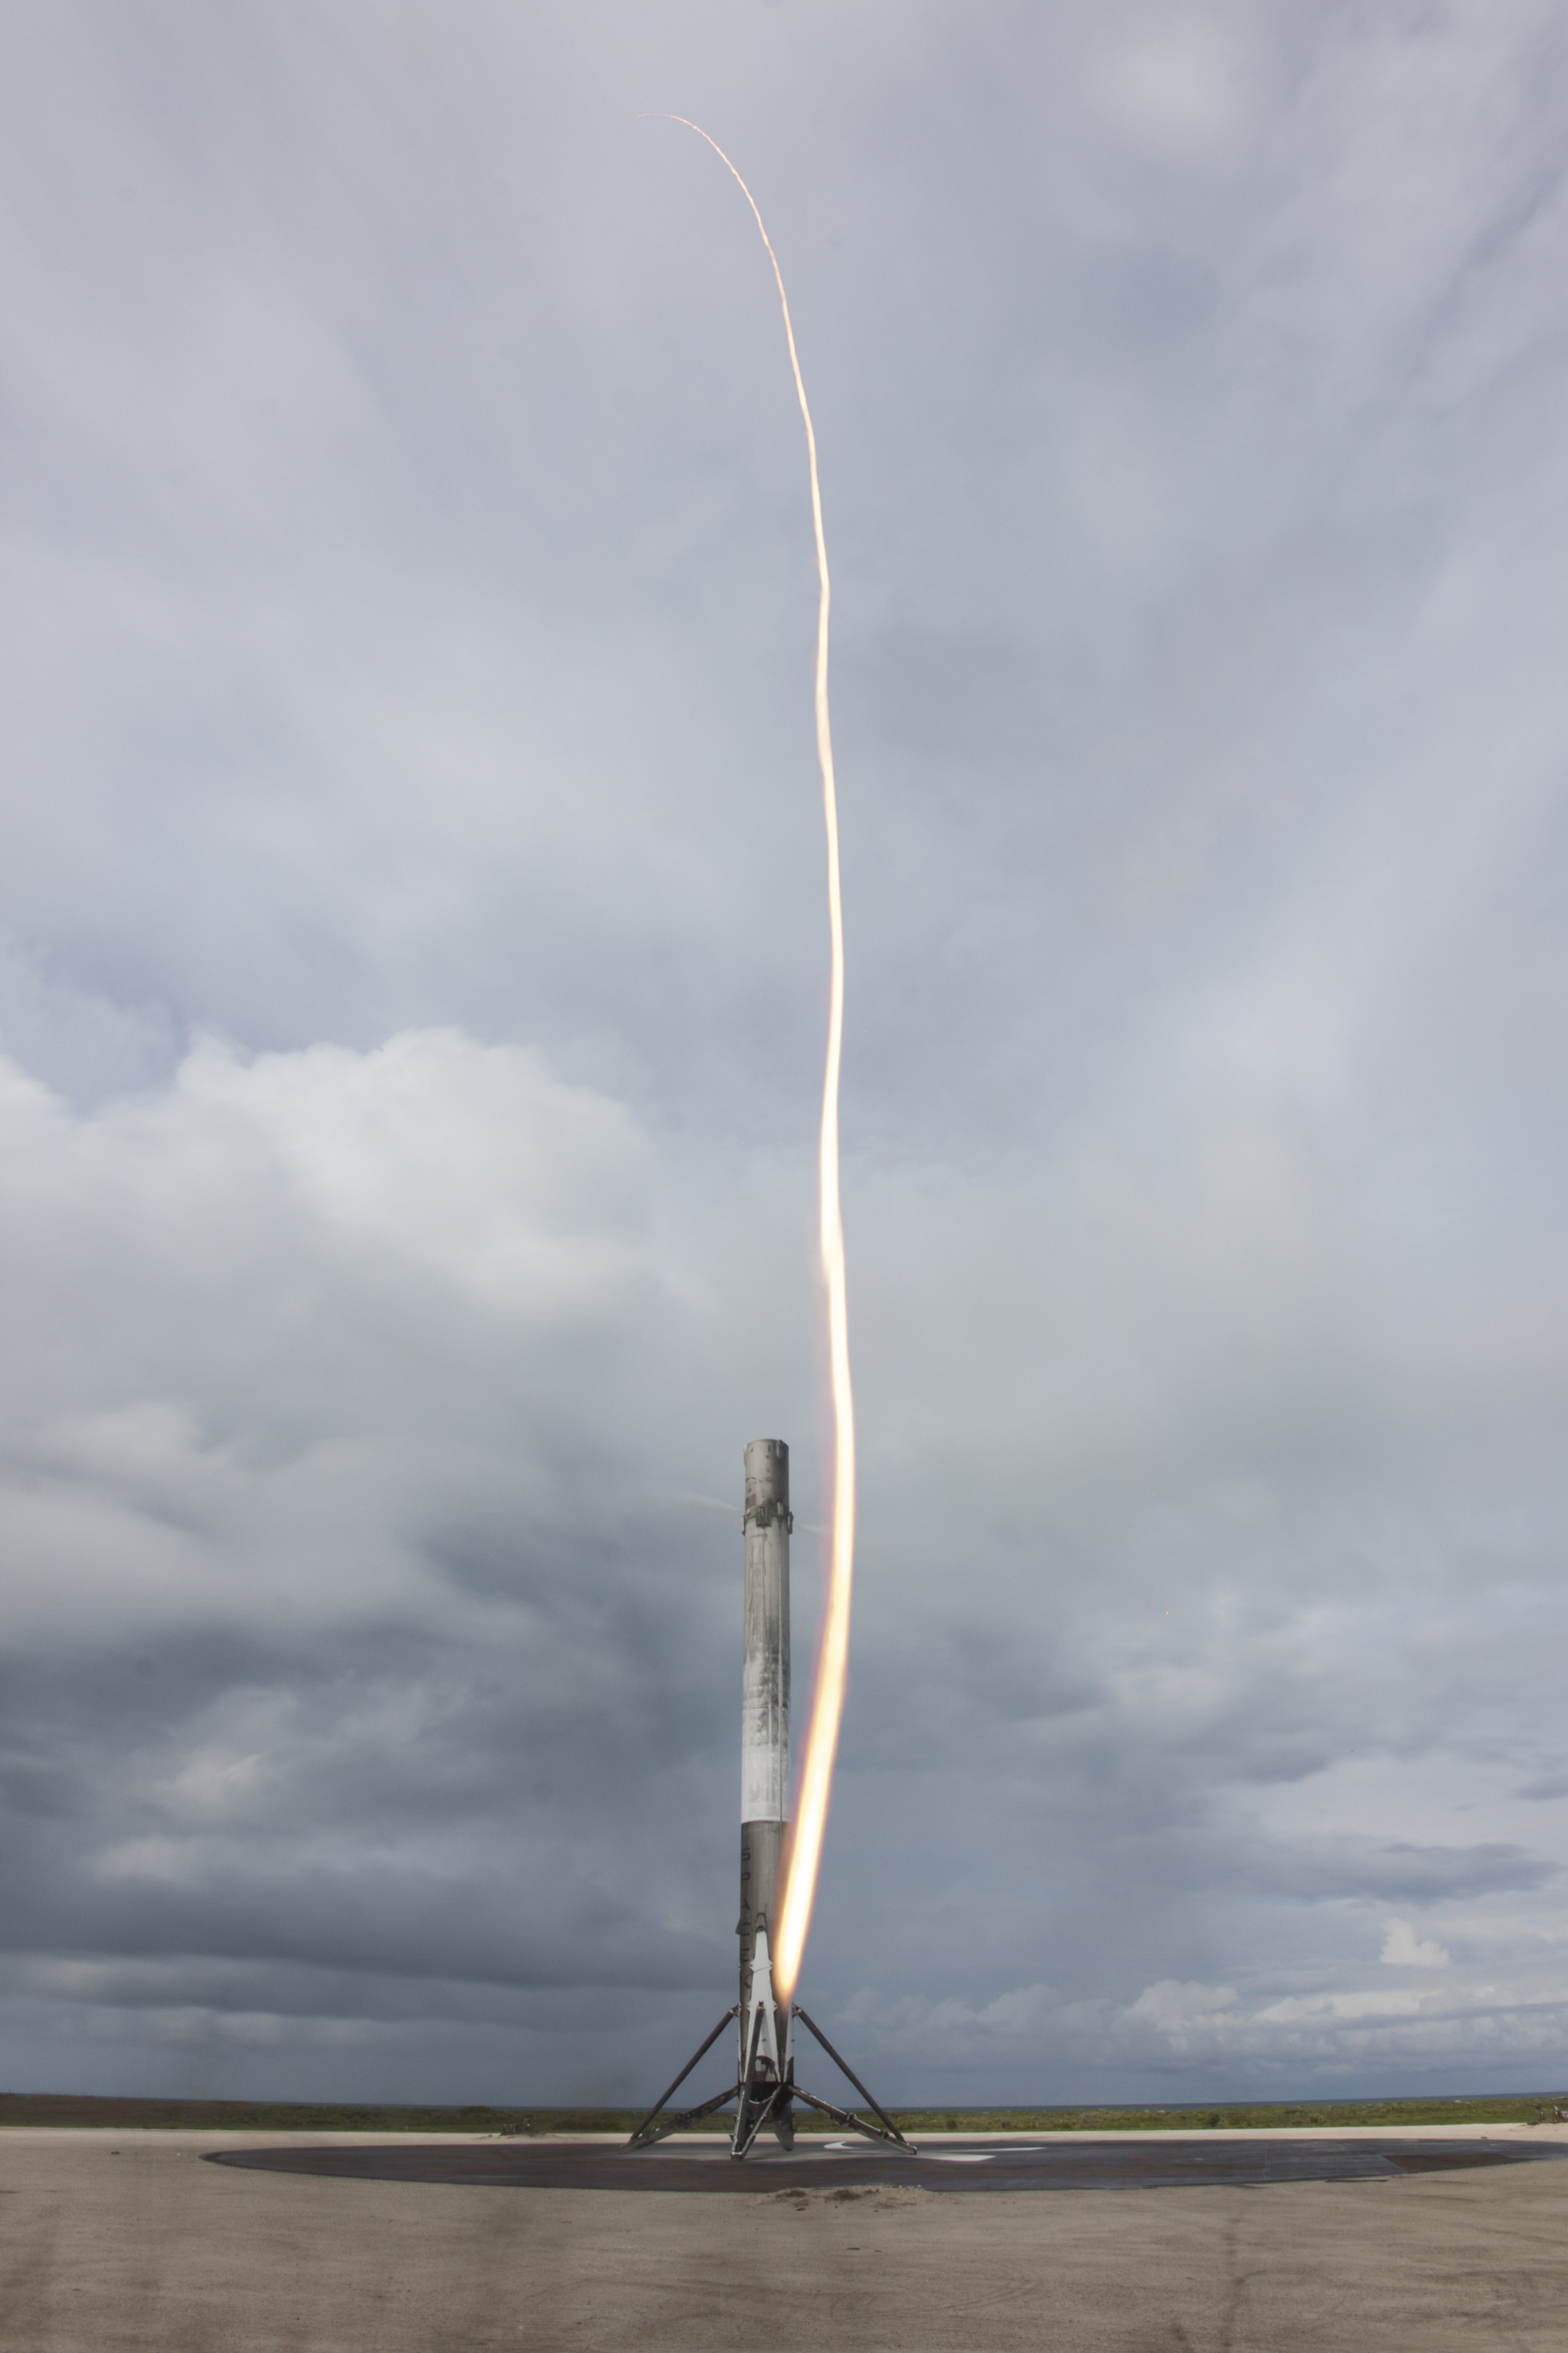 SpaceX, Rocket, Long exposure, Clouds Wallpaper